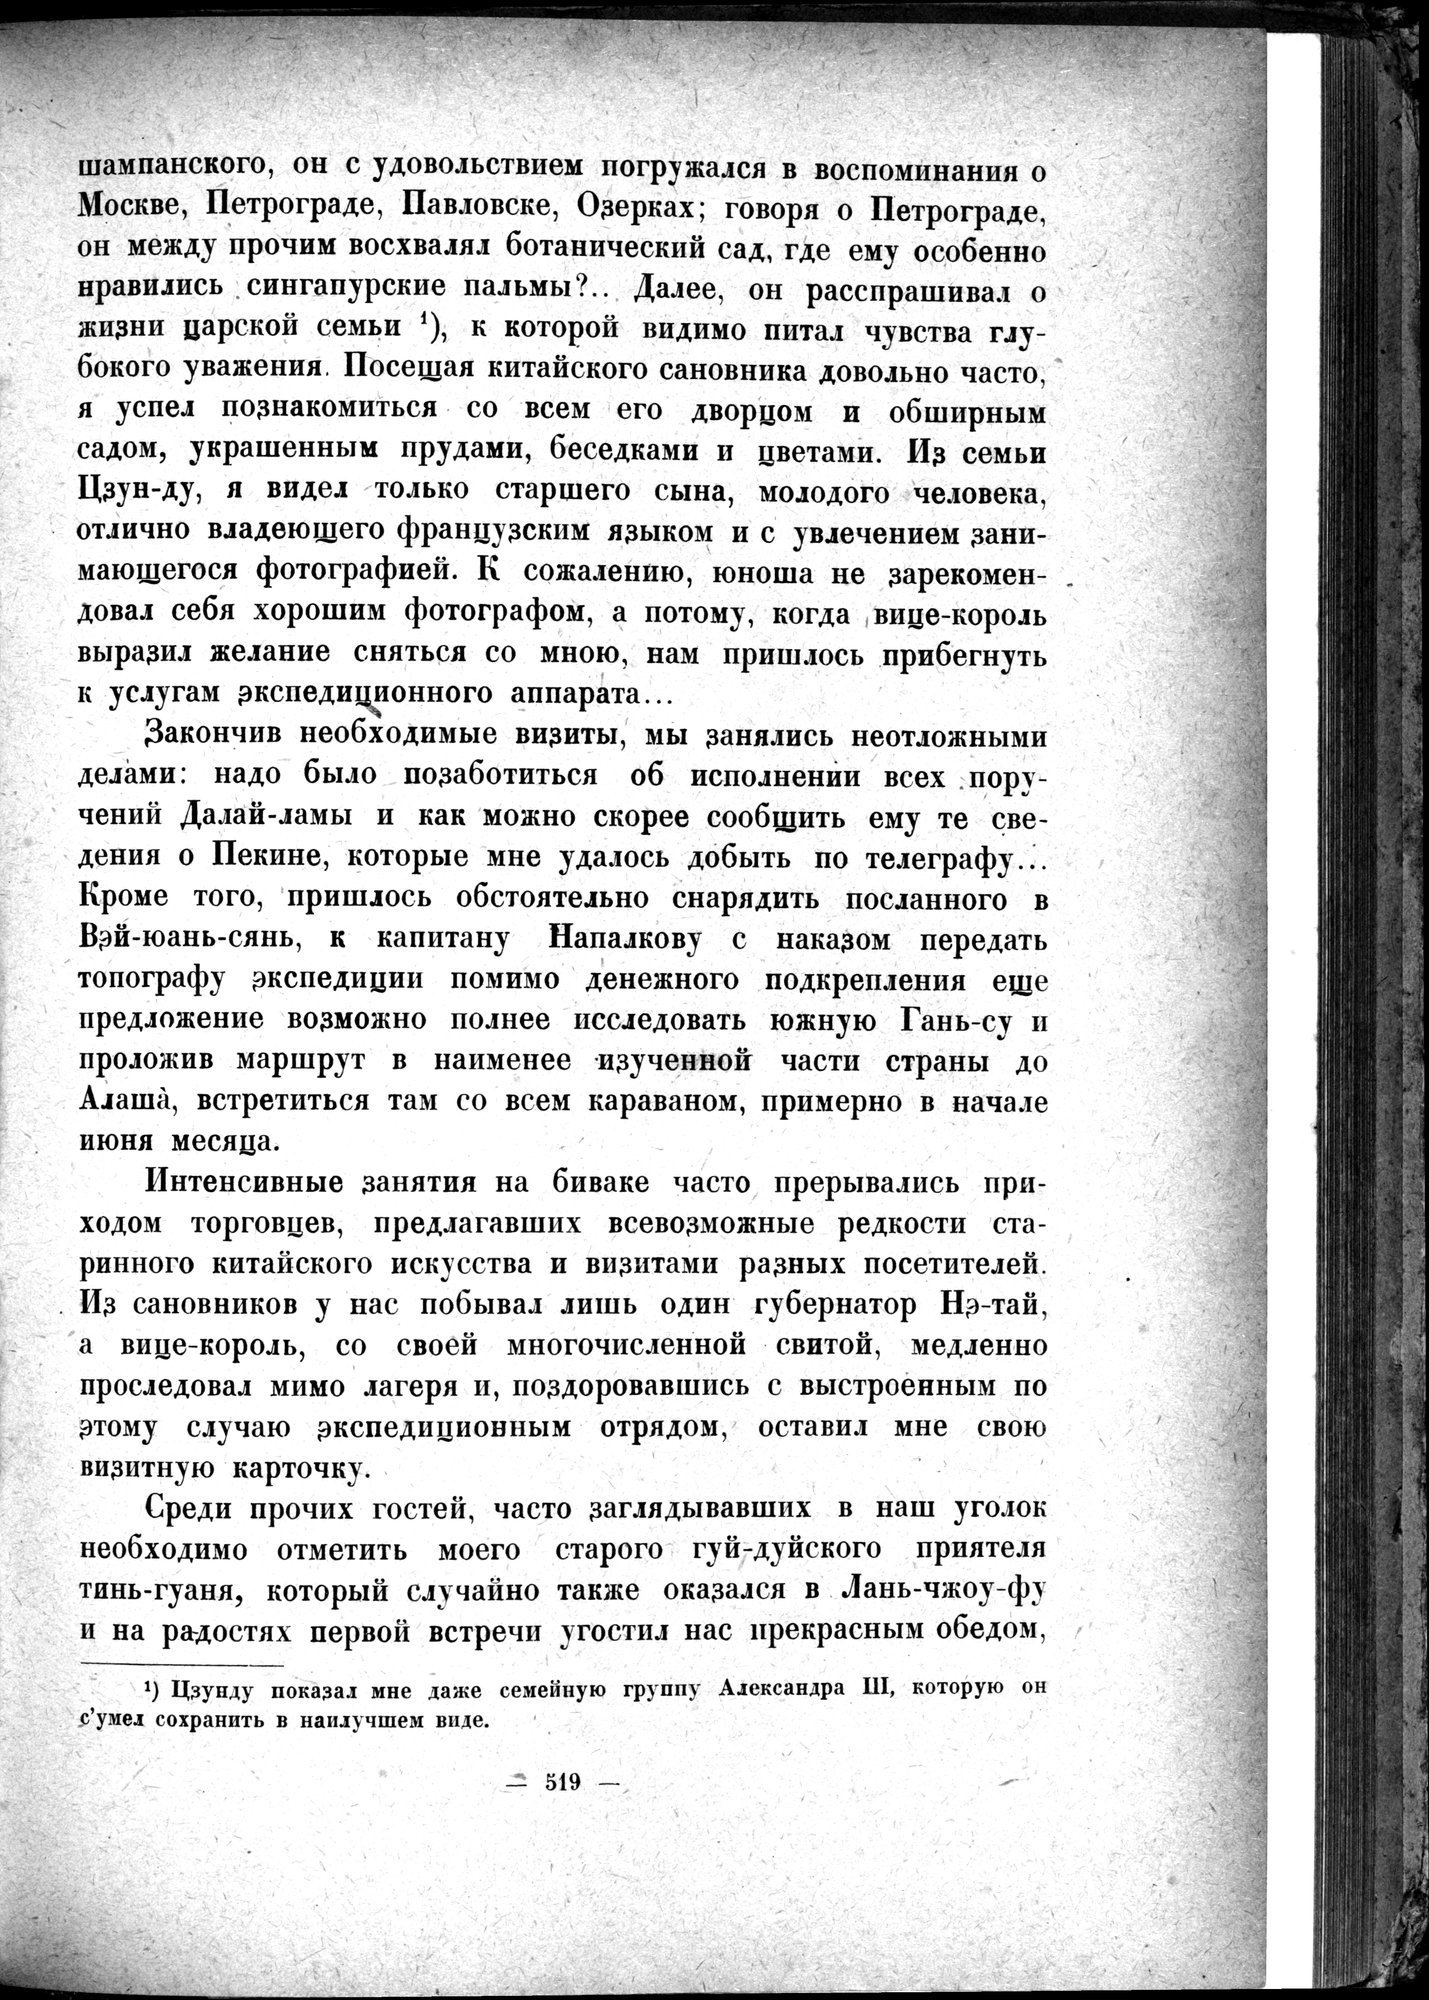 Mongoliya i Amdo i mertby gorod Khara-Khoto : vol.1 / Page 601 (Grayscale High Resolution Image)